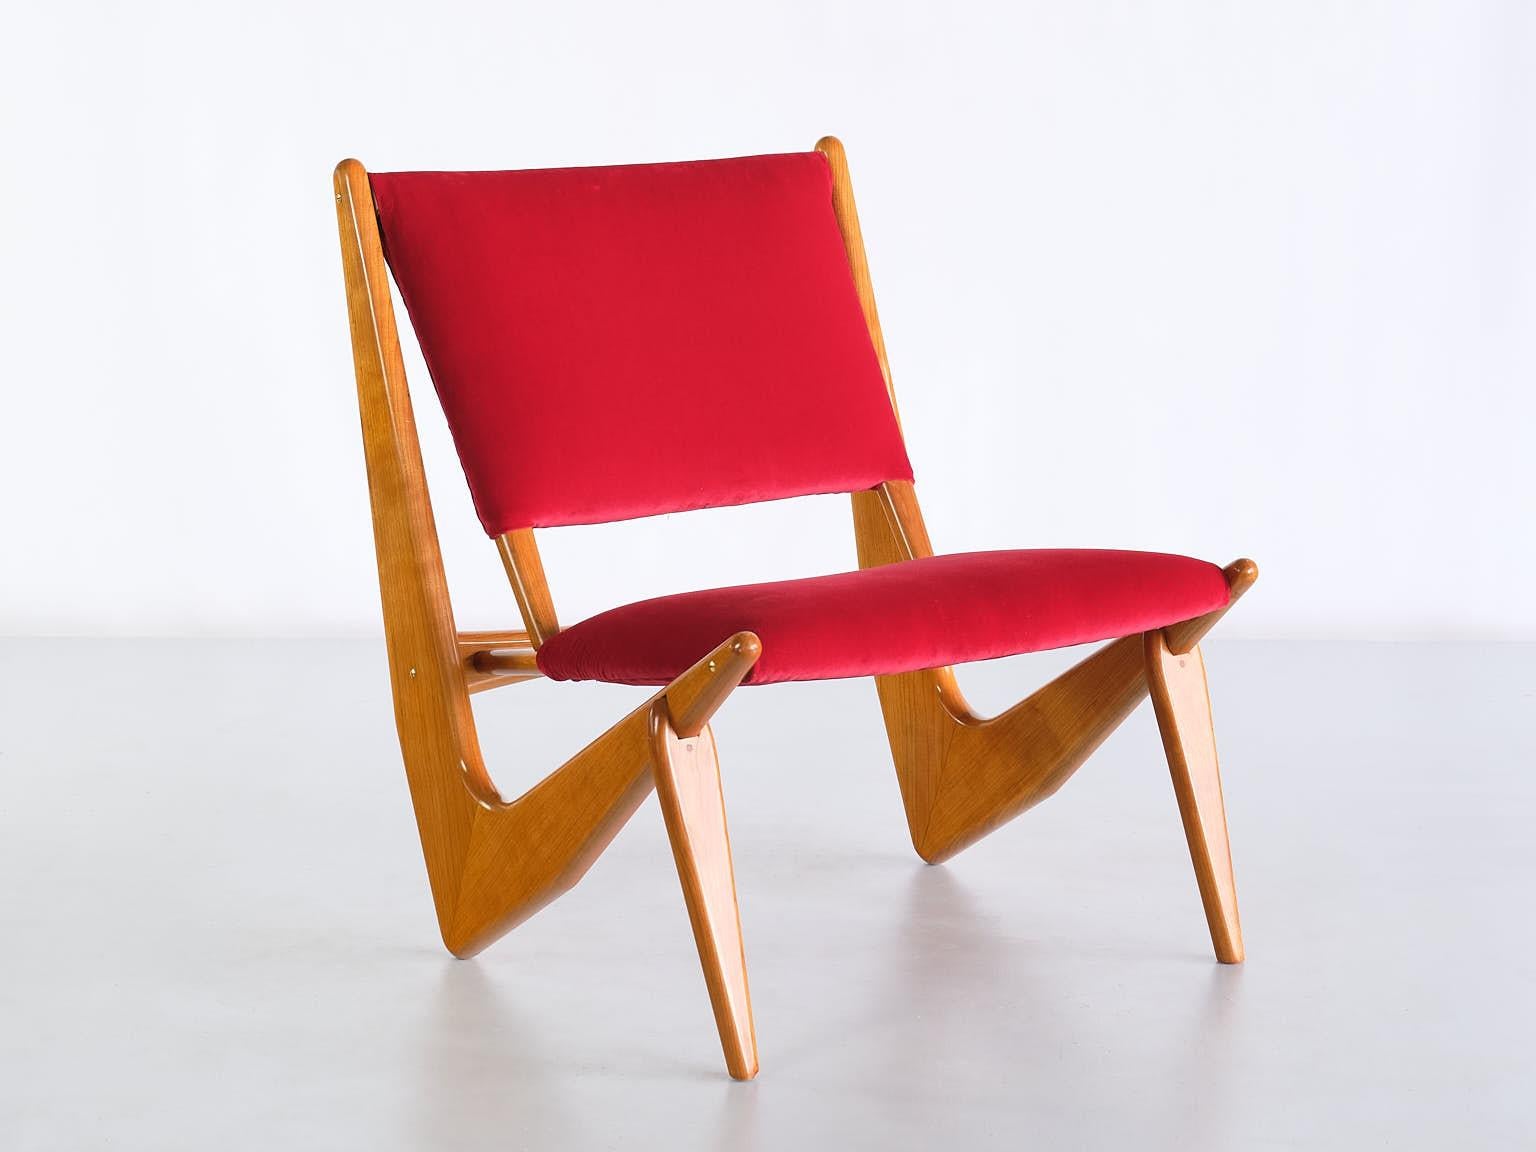 Scandinavian Modern Bertil Behrman Lounge Chair in Oak and Velvet, Engen Möbelfabriker, Sweden, 1956 For Sale